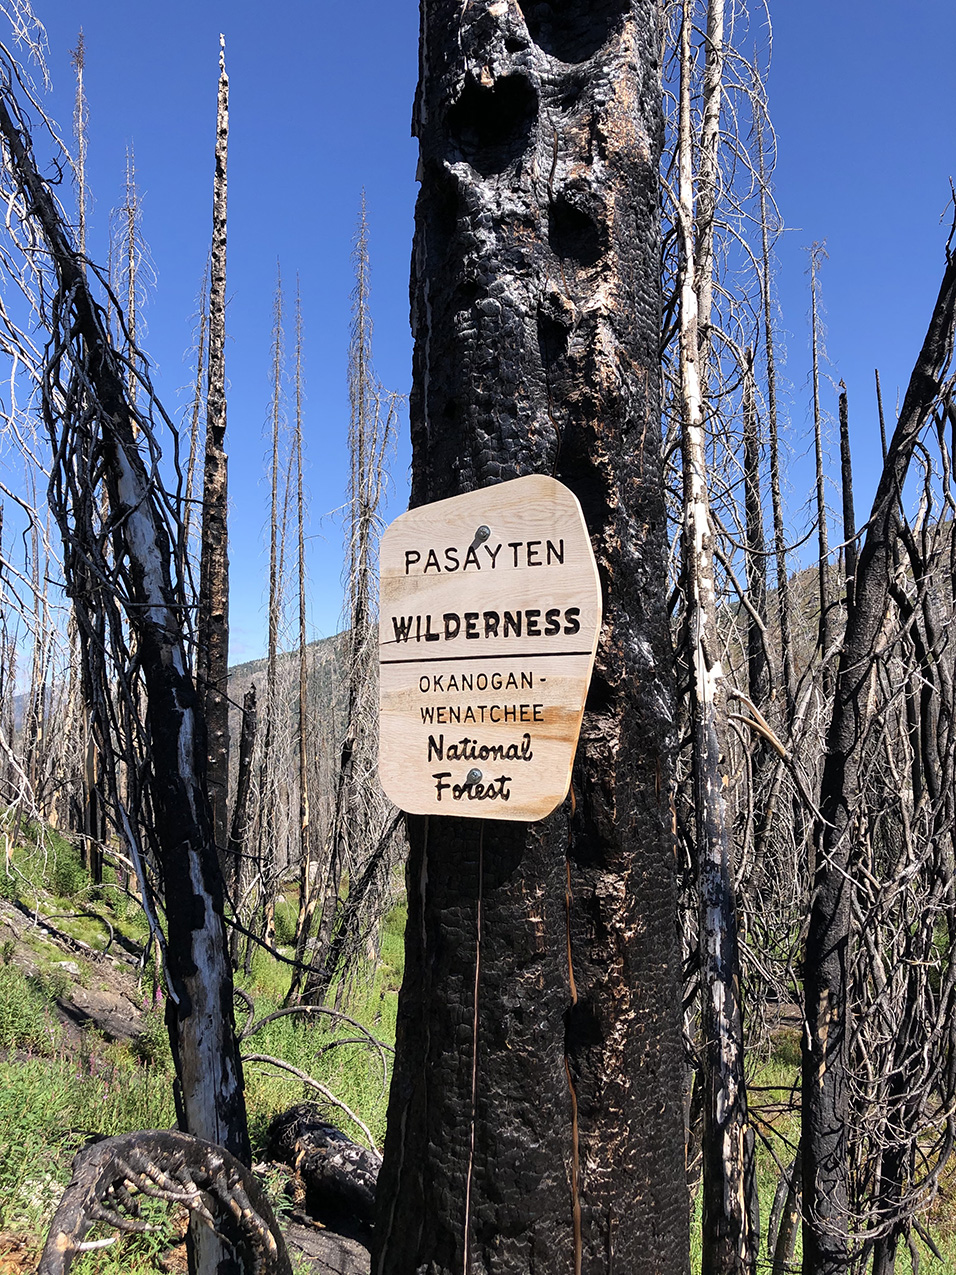 a sign on a burned tree trunk reads "Pasayten Wilderness / Okanogan-Wenatchee National Forest"